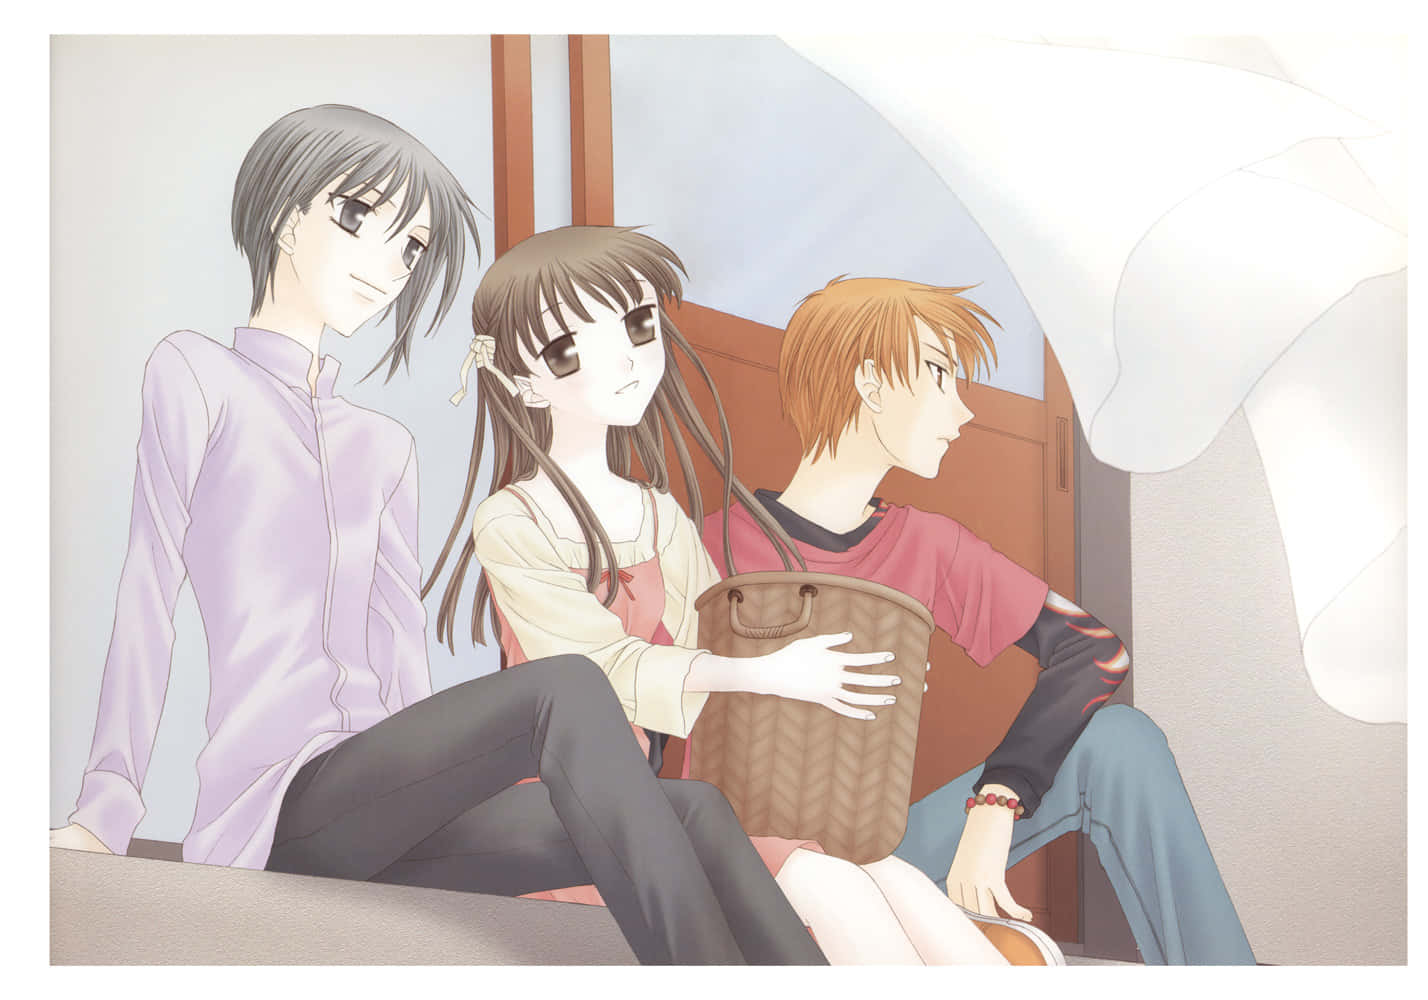 Yuki,tohru Und Kyo Sitzen - Fruits Basket Anime Wallpaper